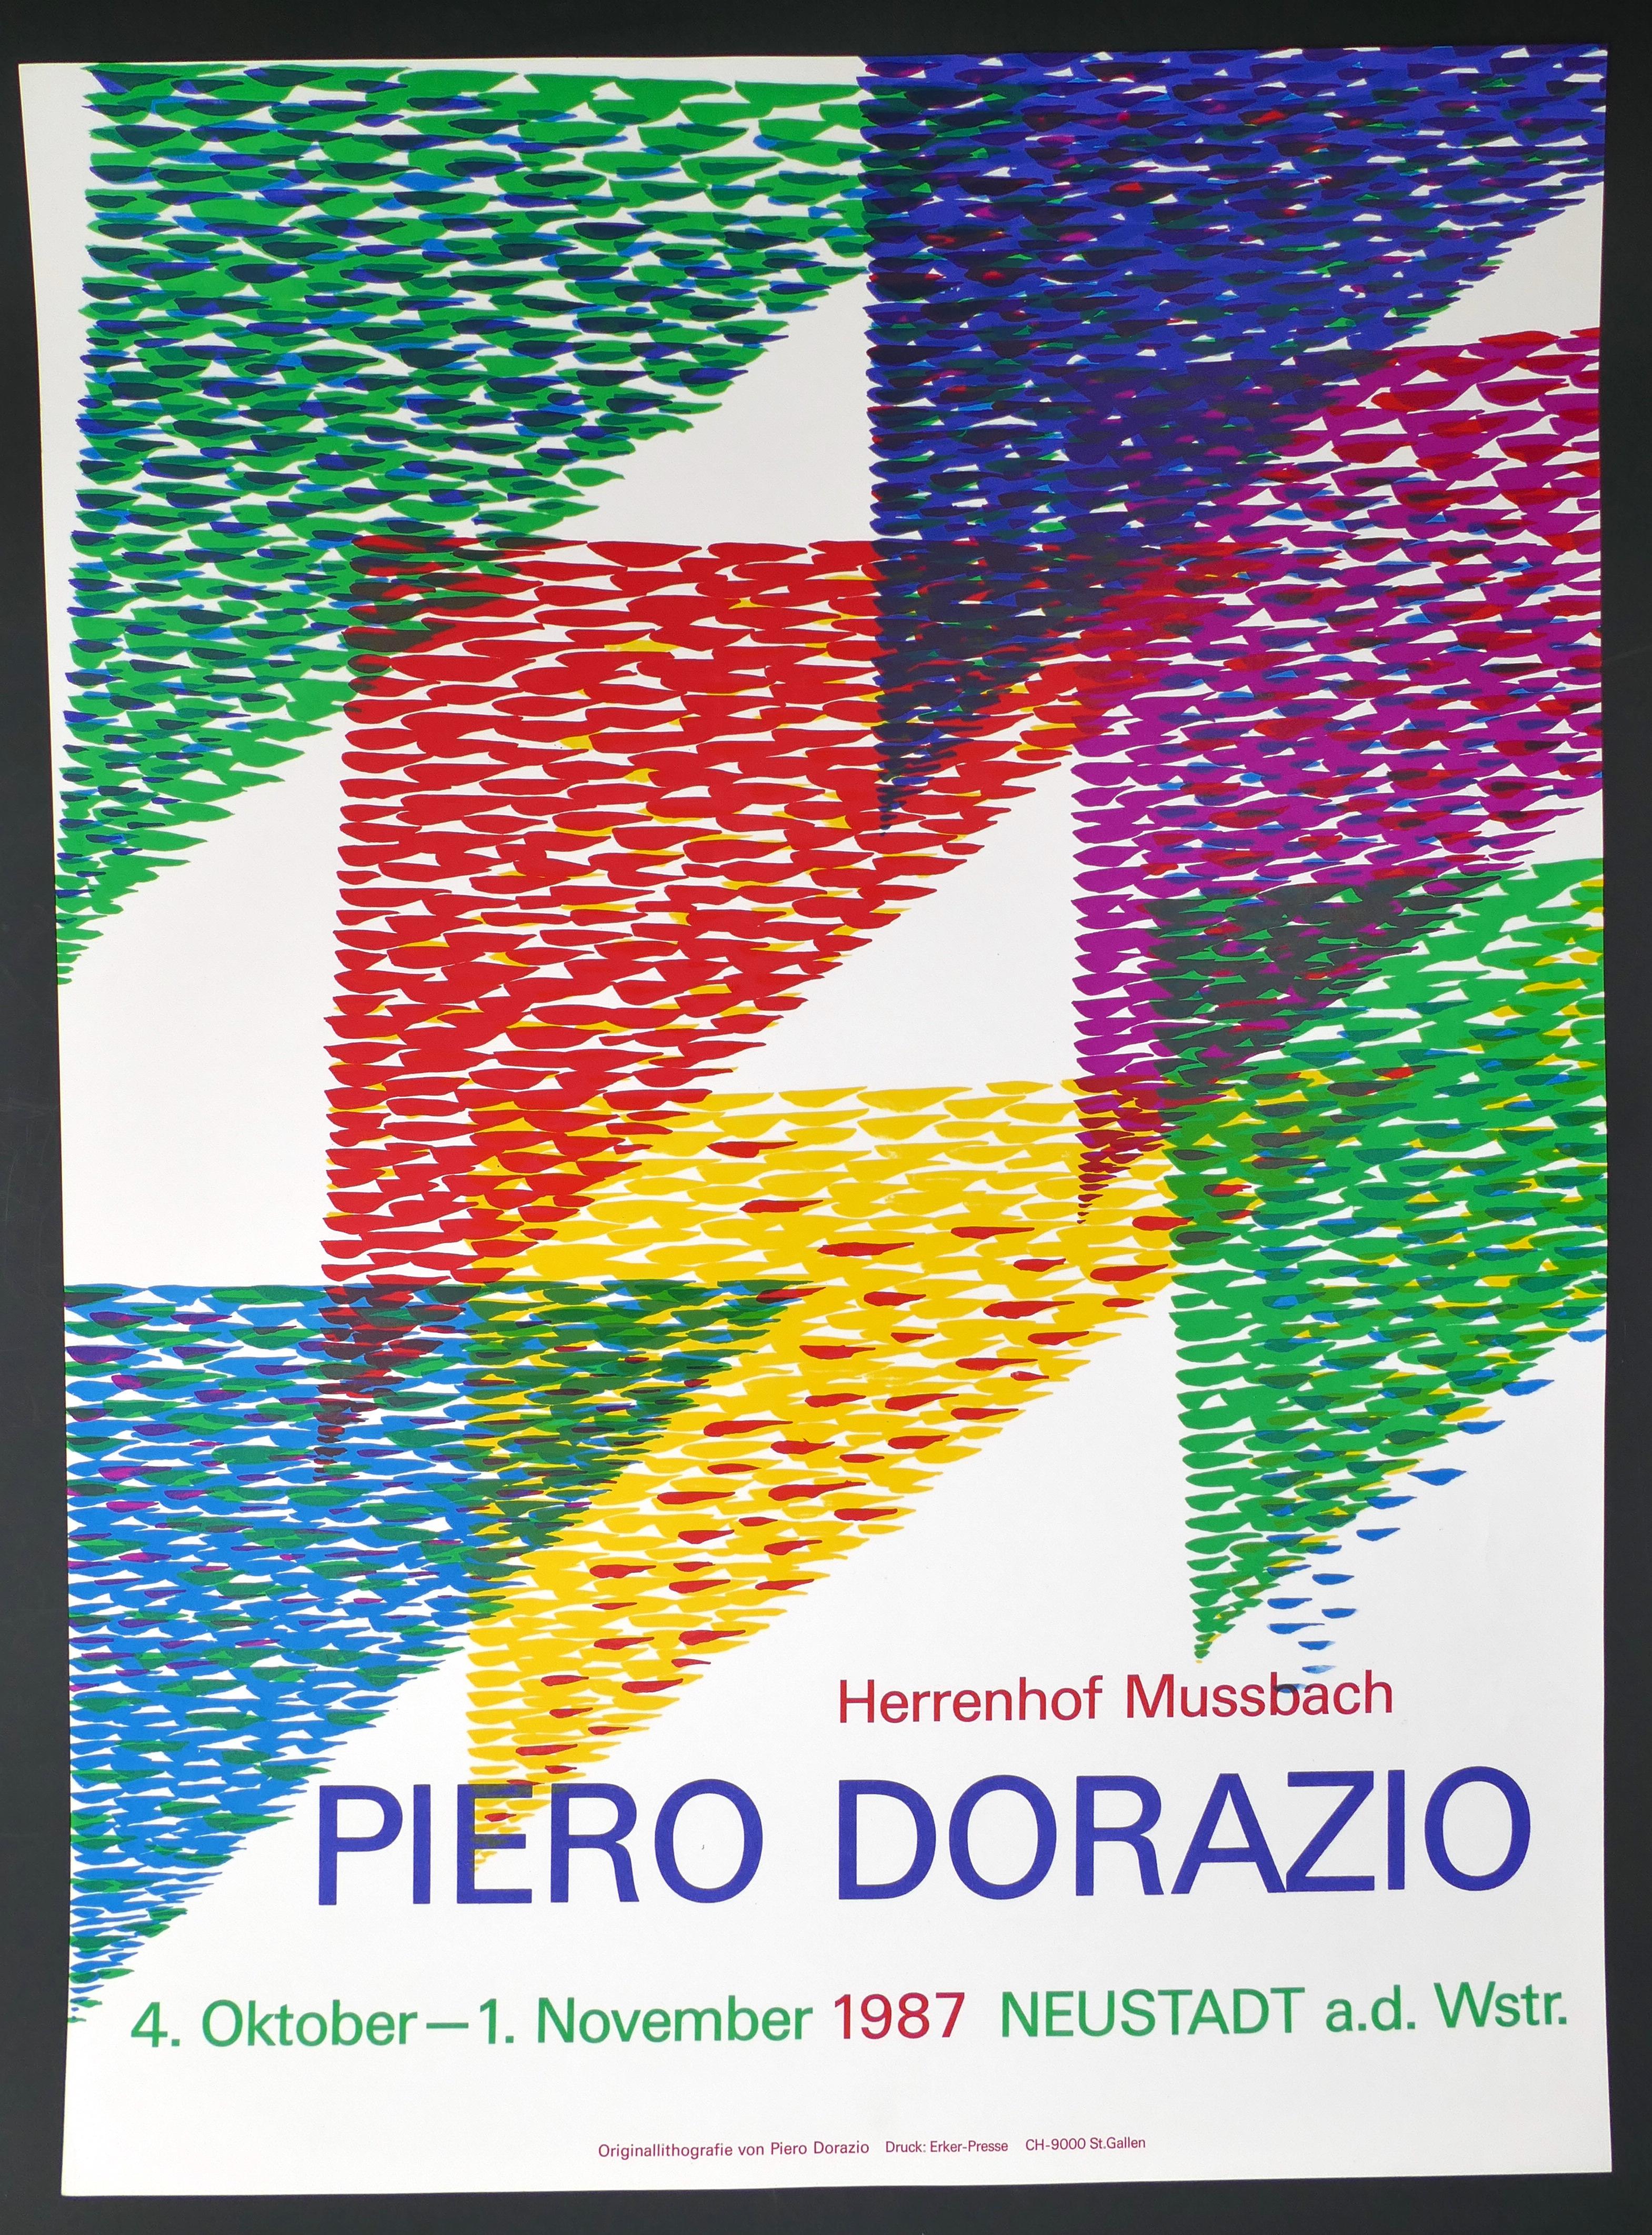 Poster for P. Dorazio's Exhibition in Herrenhof Musbach, Germany